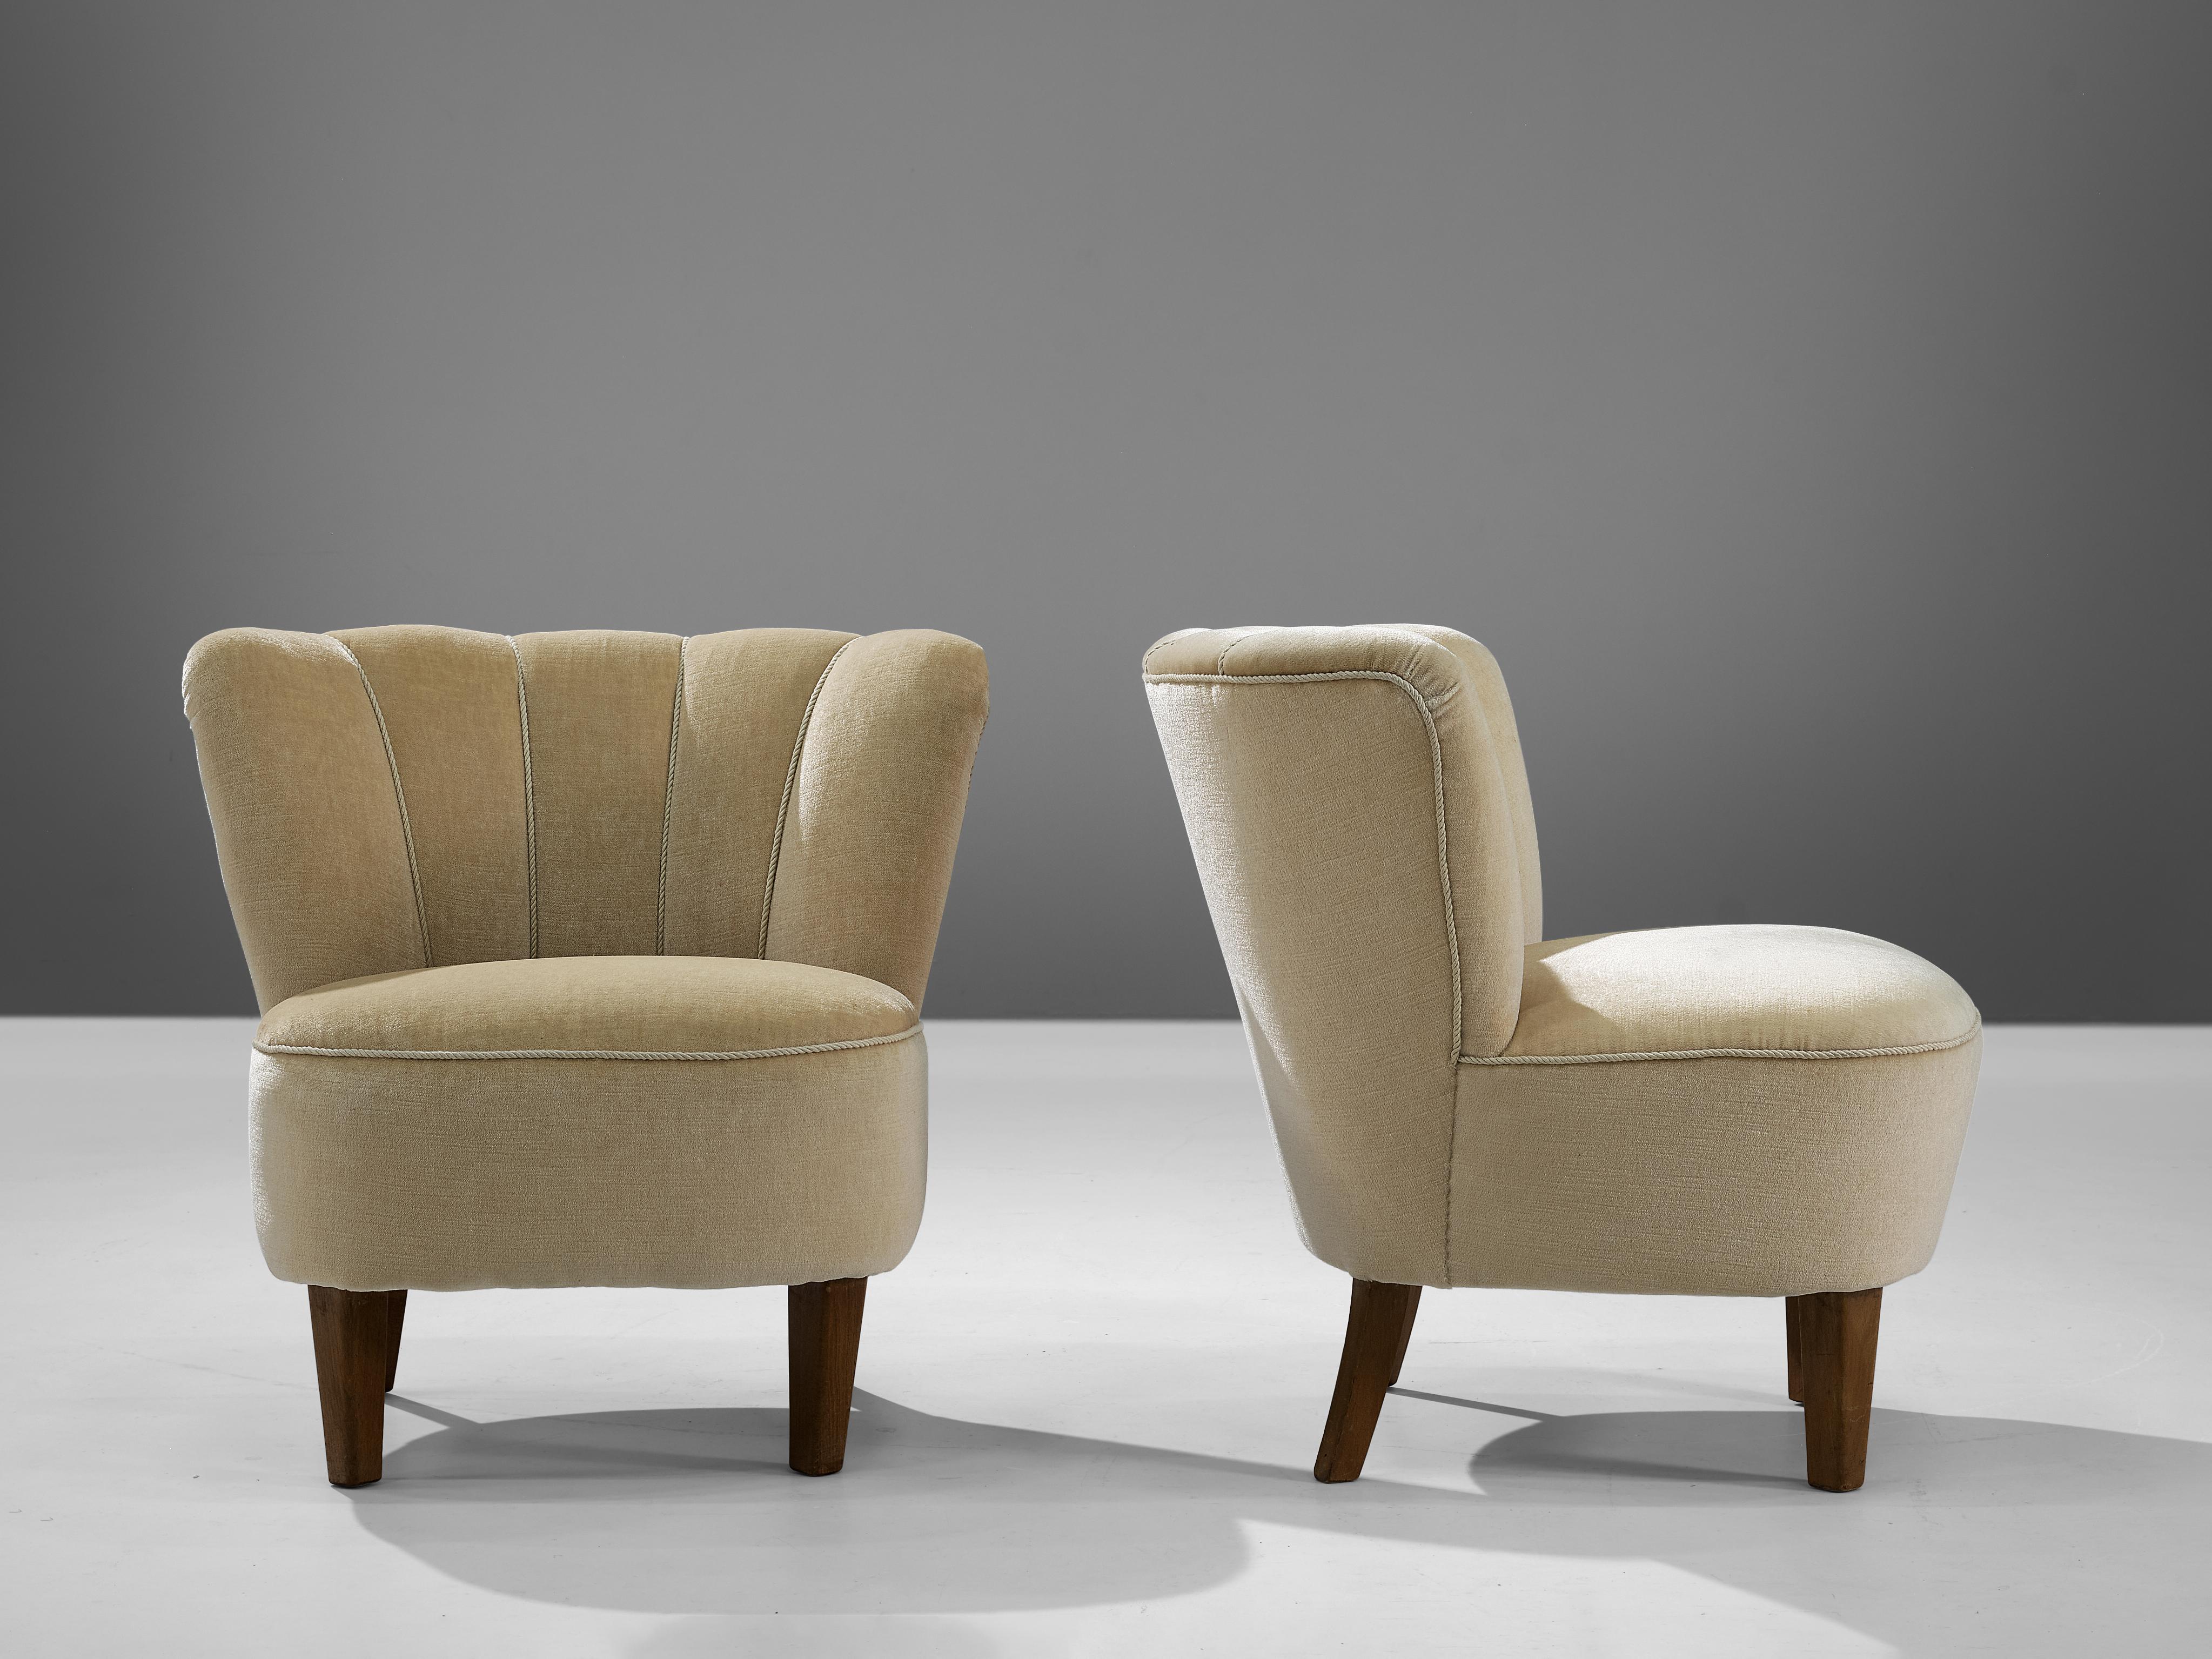 Pair of Art Deco Lounge Chairs in Beige Velvet Upholstery 1